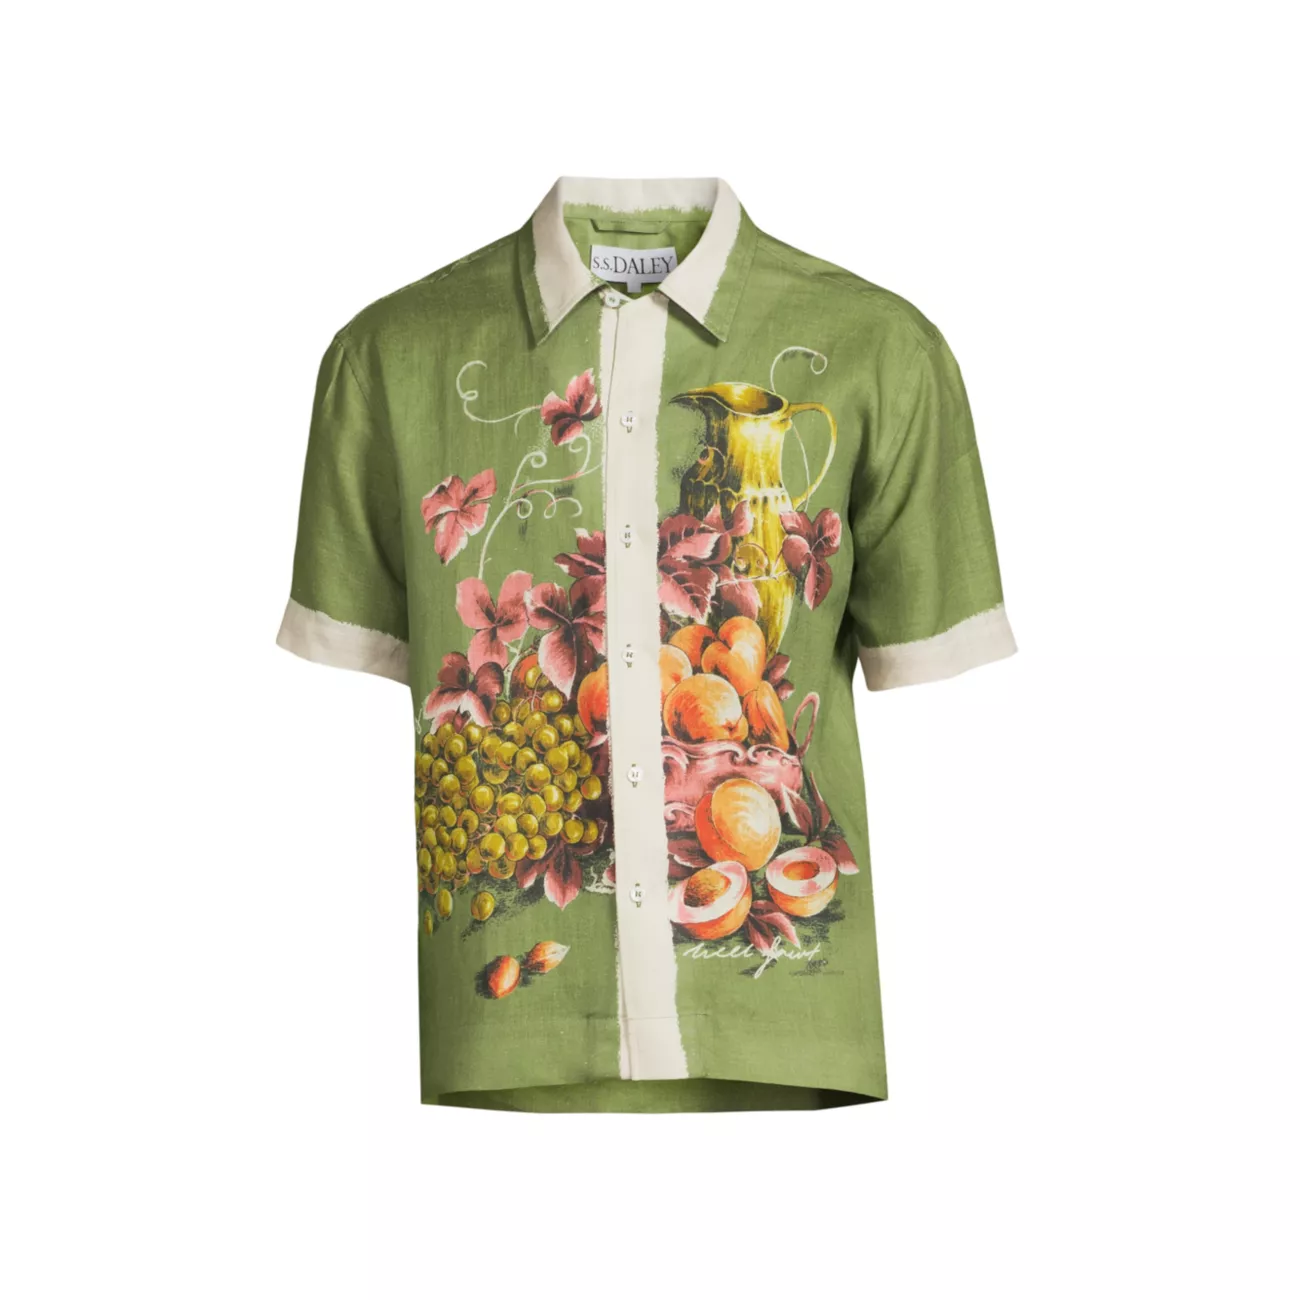 Merry Ment Fruit Bowl Linen Button-Front Shirt S.S. Daley